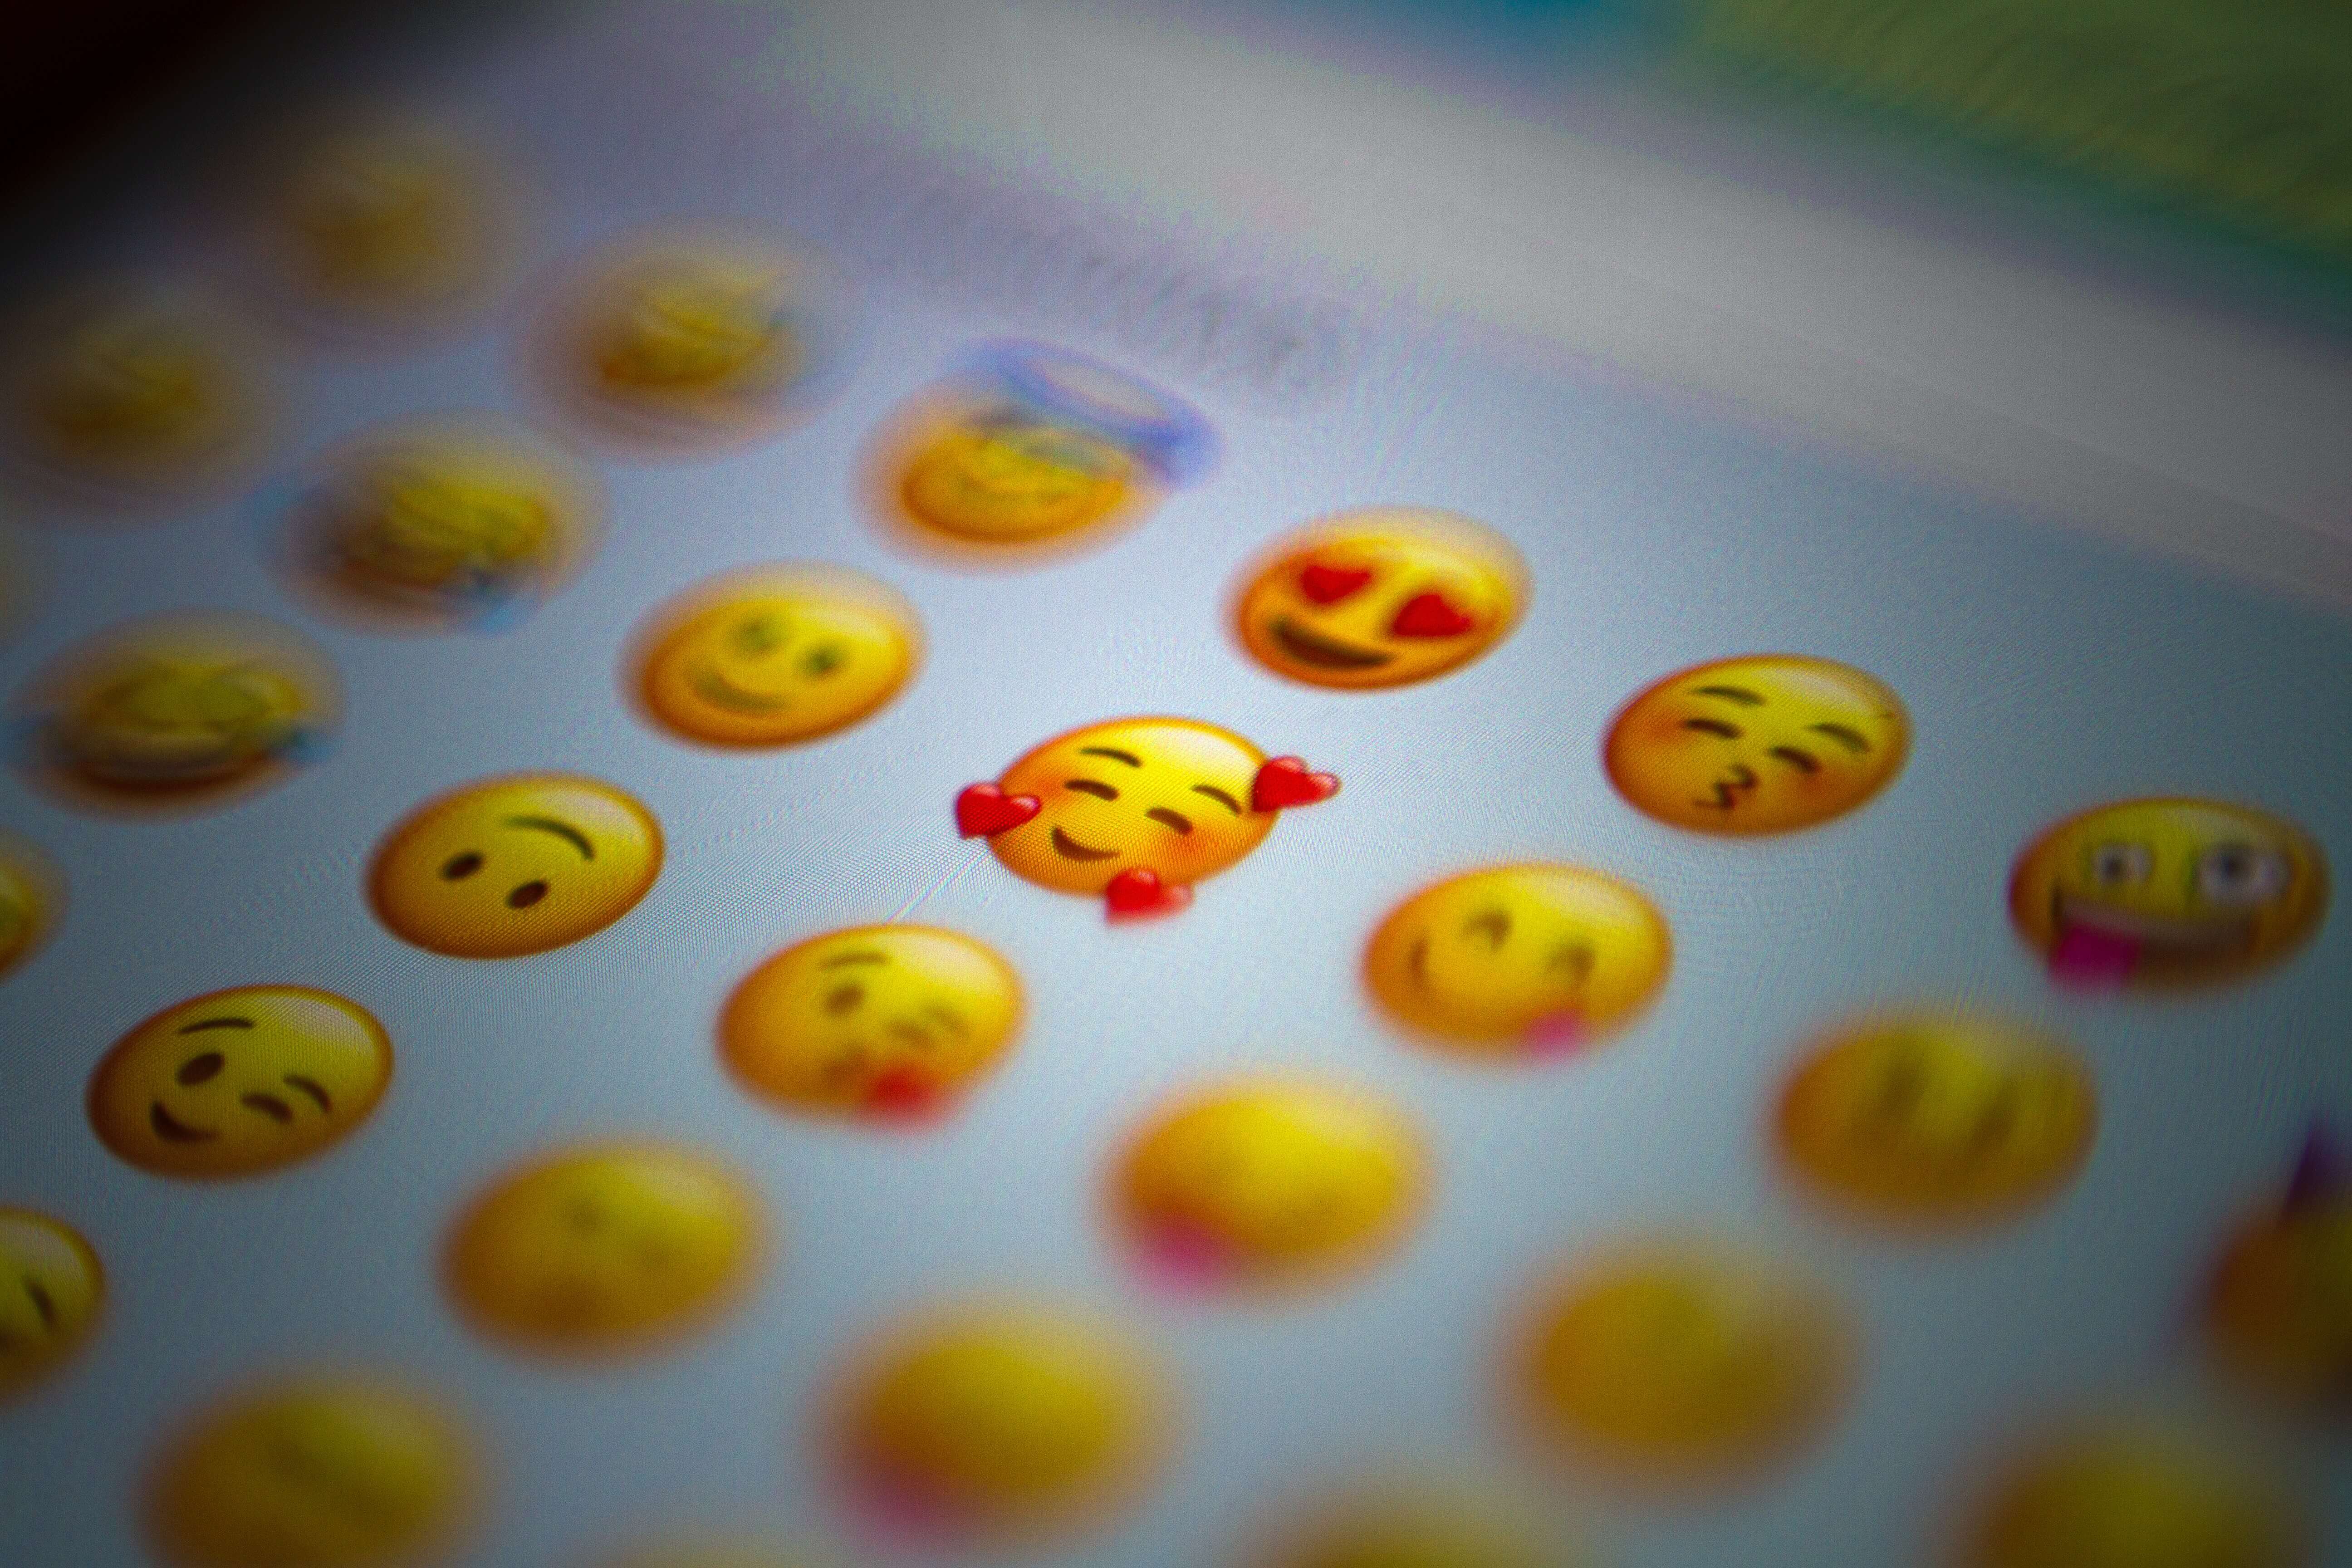 emojis on phone screen